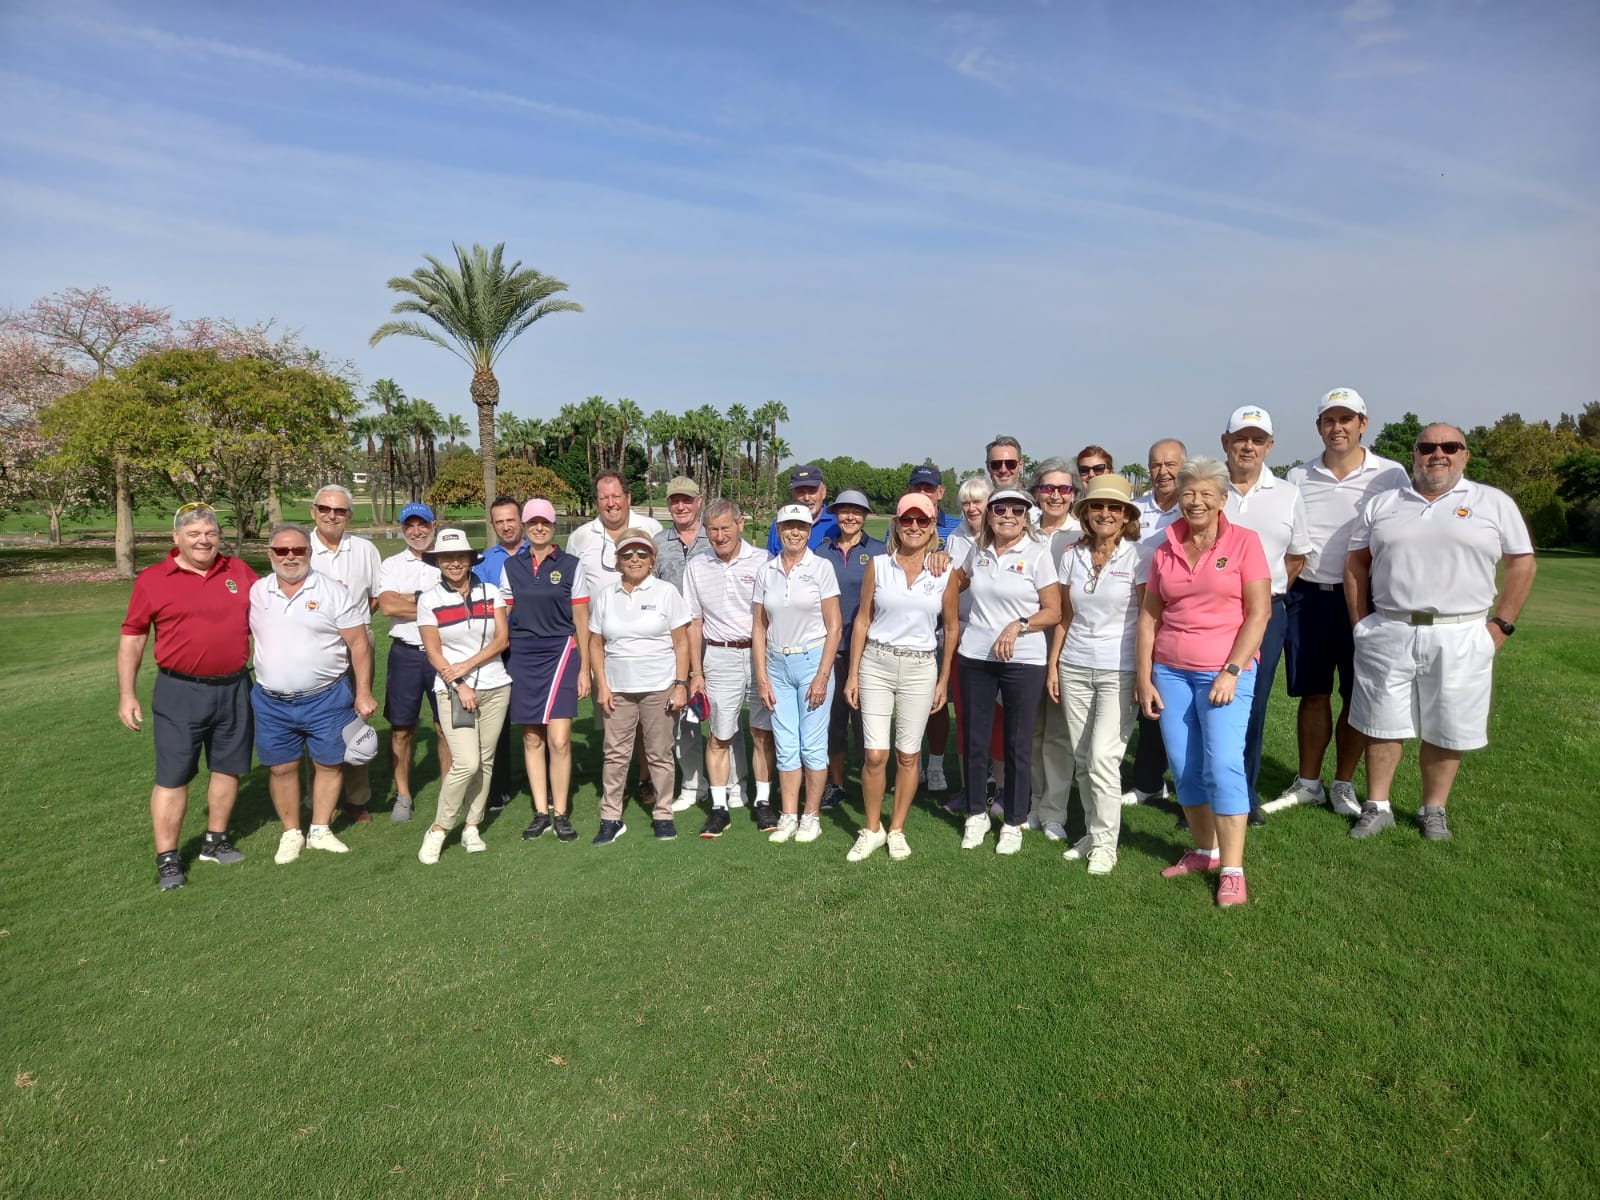 Crail Golfing Society beats Real Club Sevilla Golf in international matchplay between both clubs